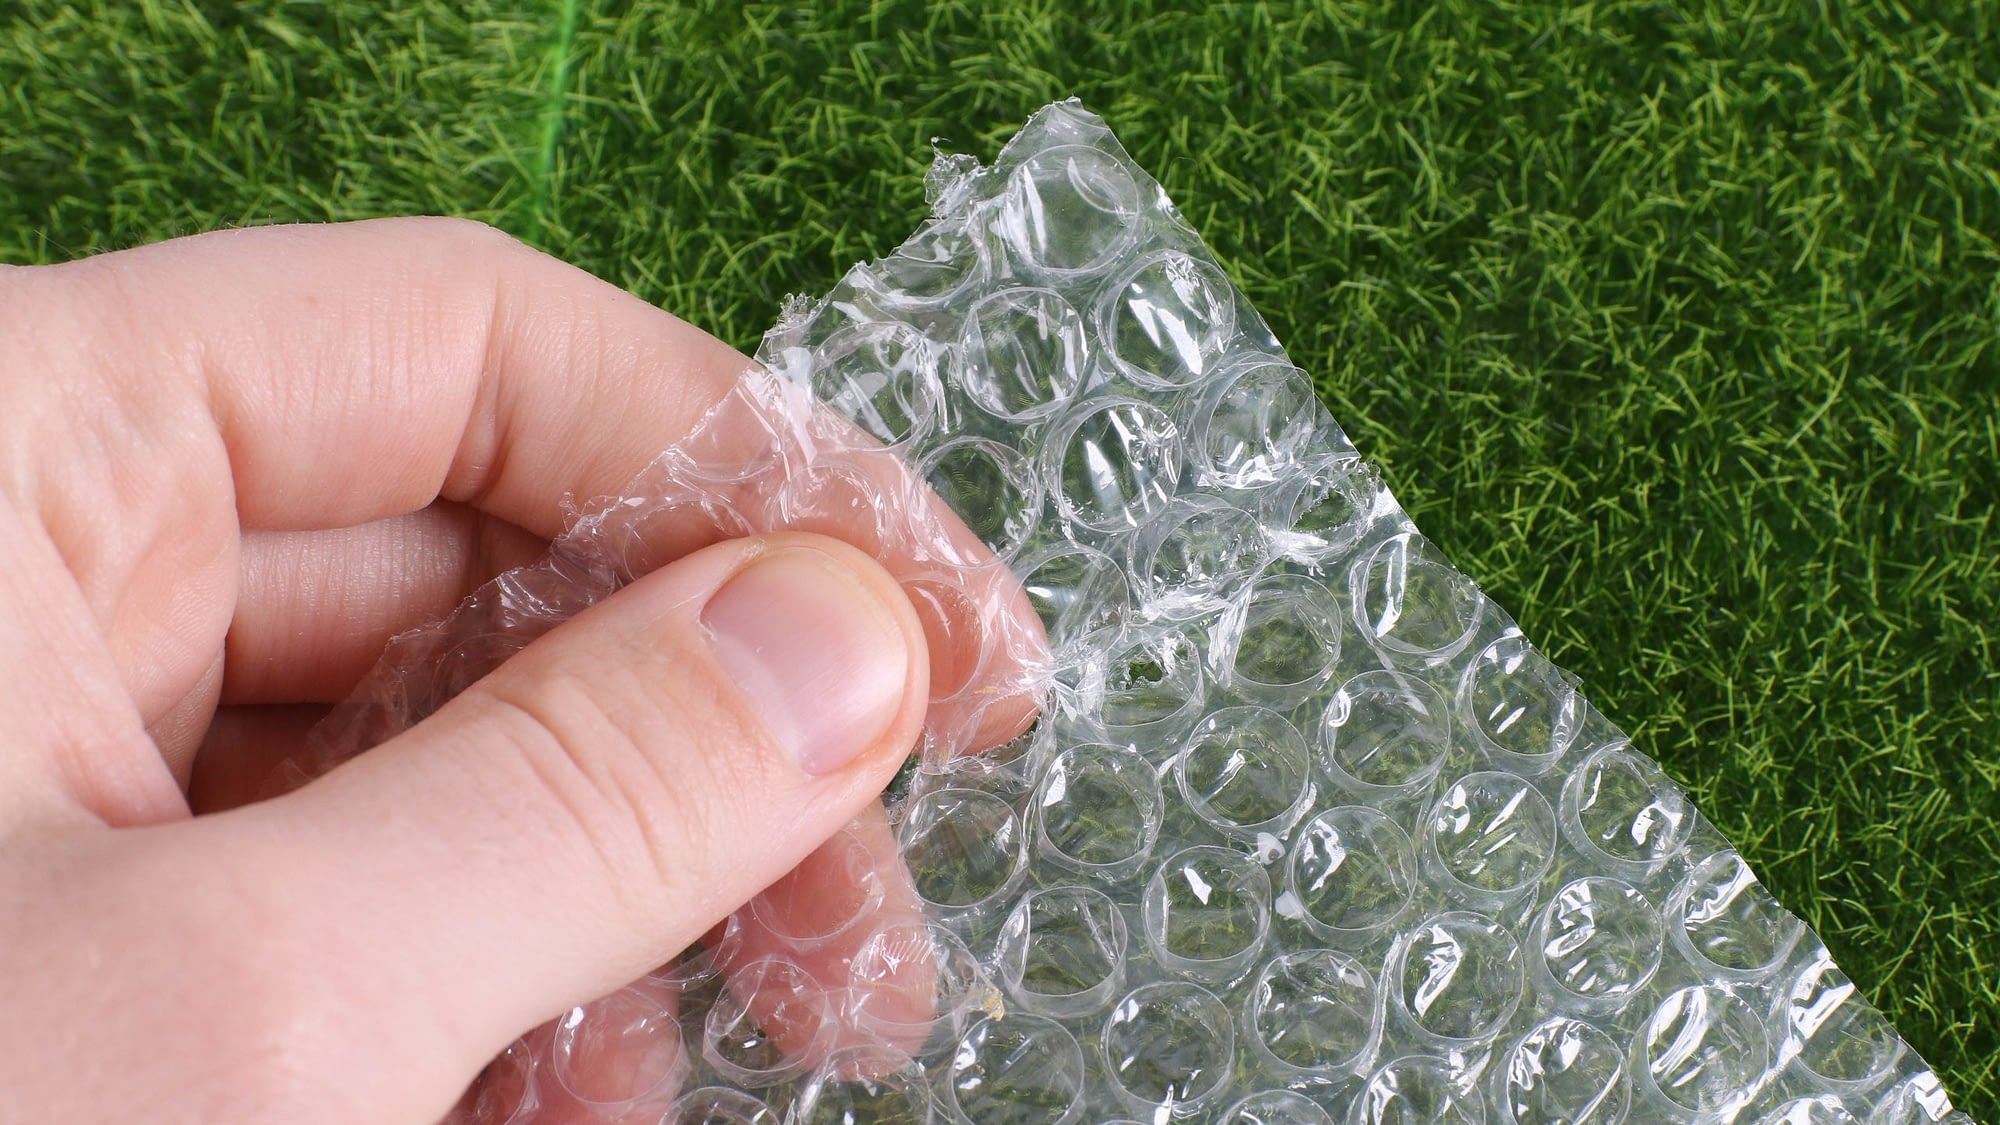 Image: Hand squeezing bubble wrap